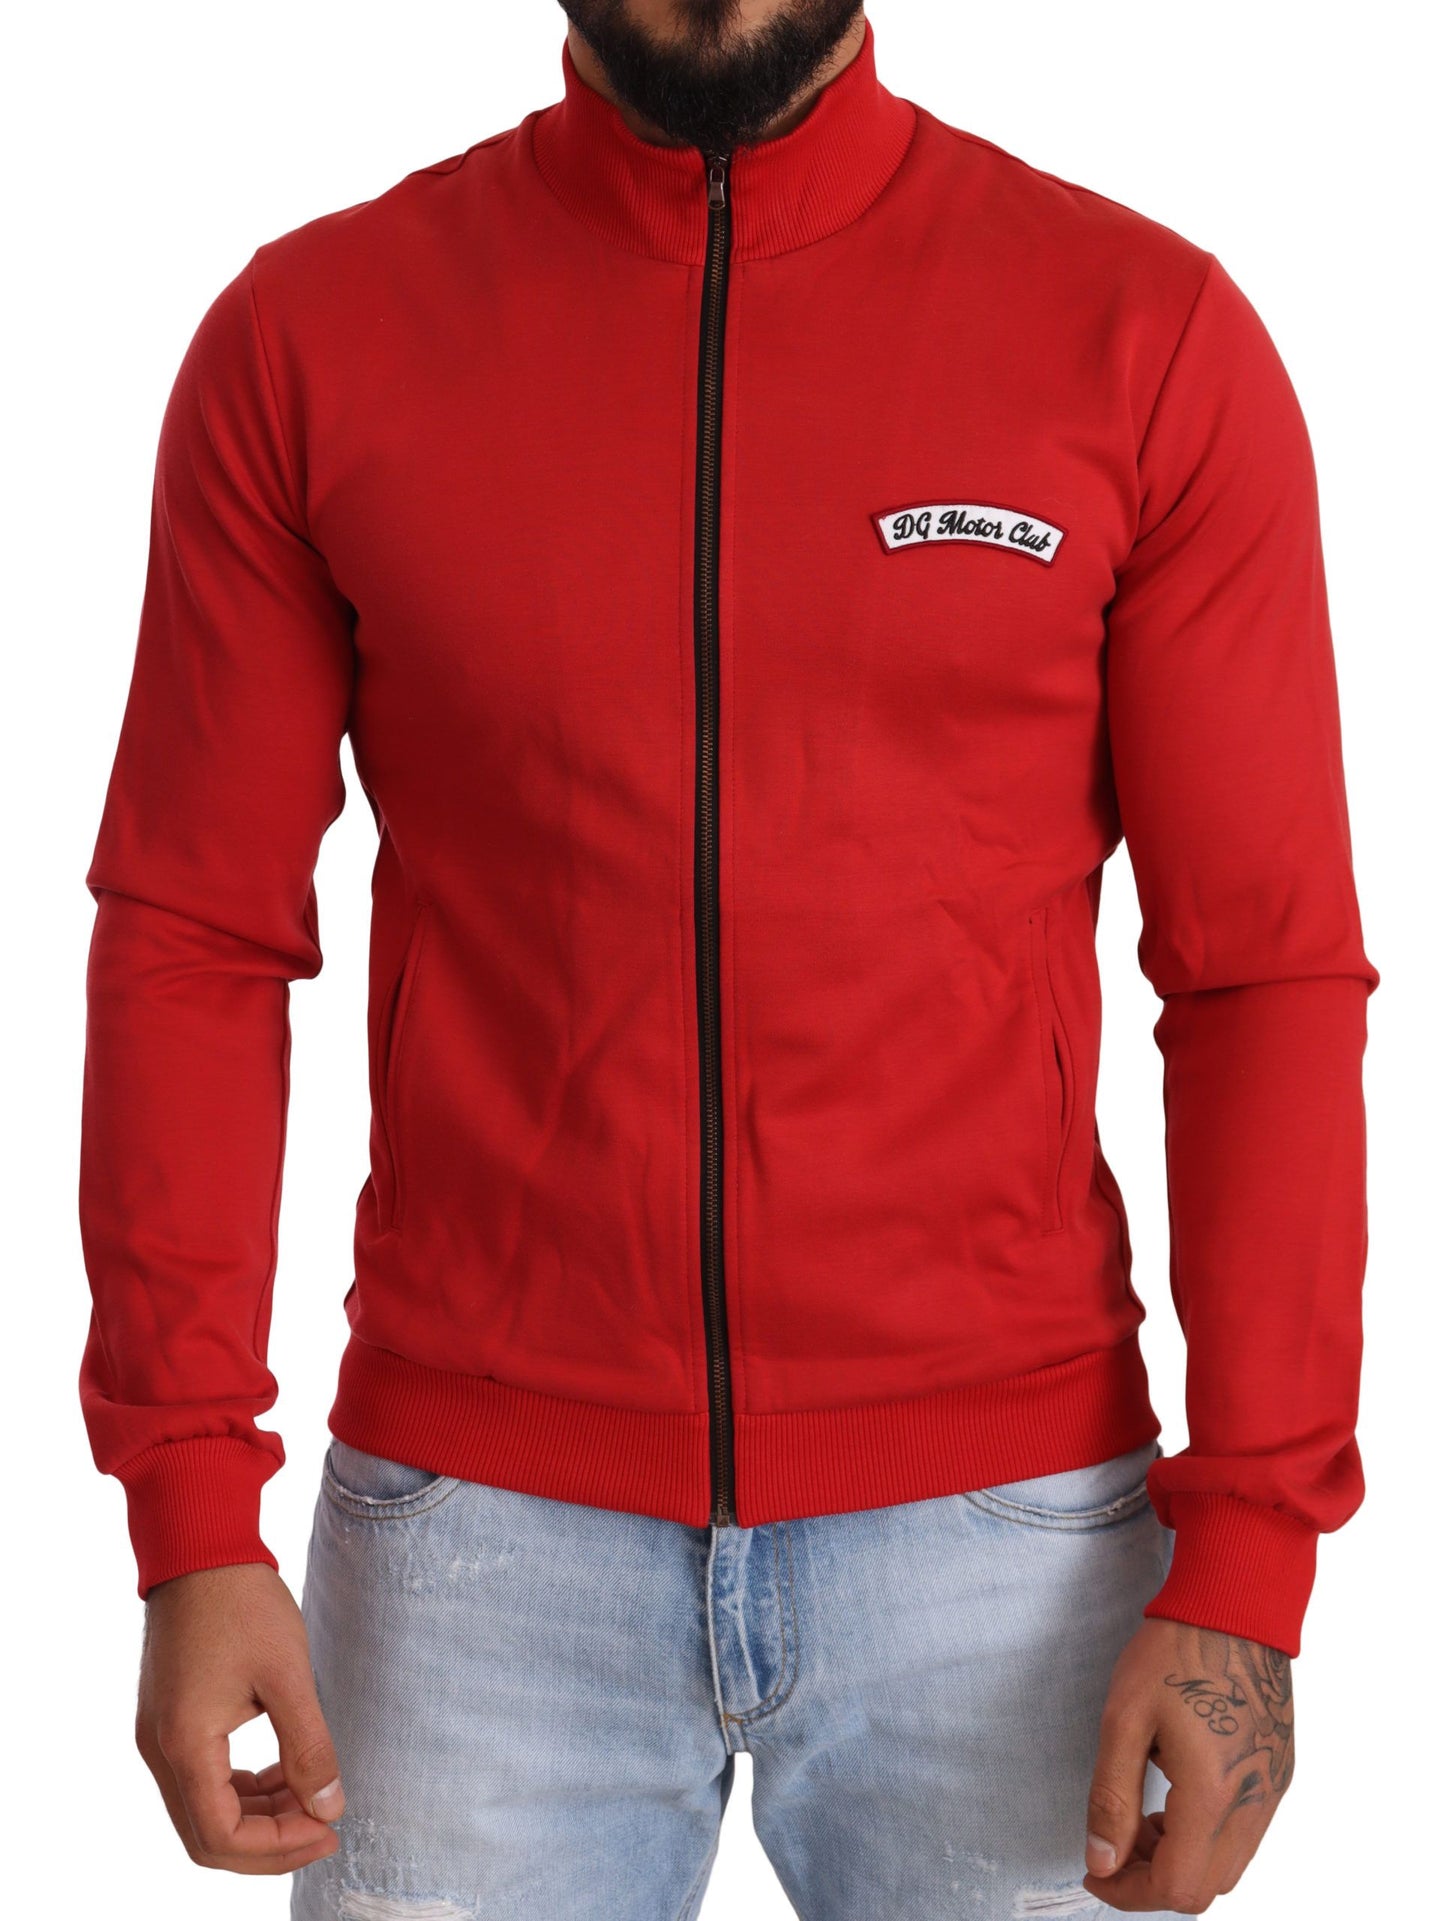 Elegant Red Full Zip Sweater with DG Motor Club Motif